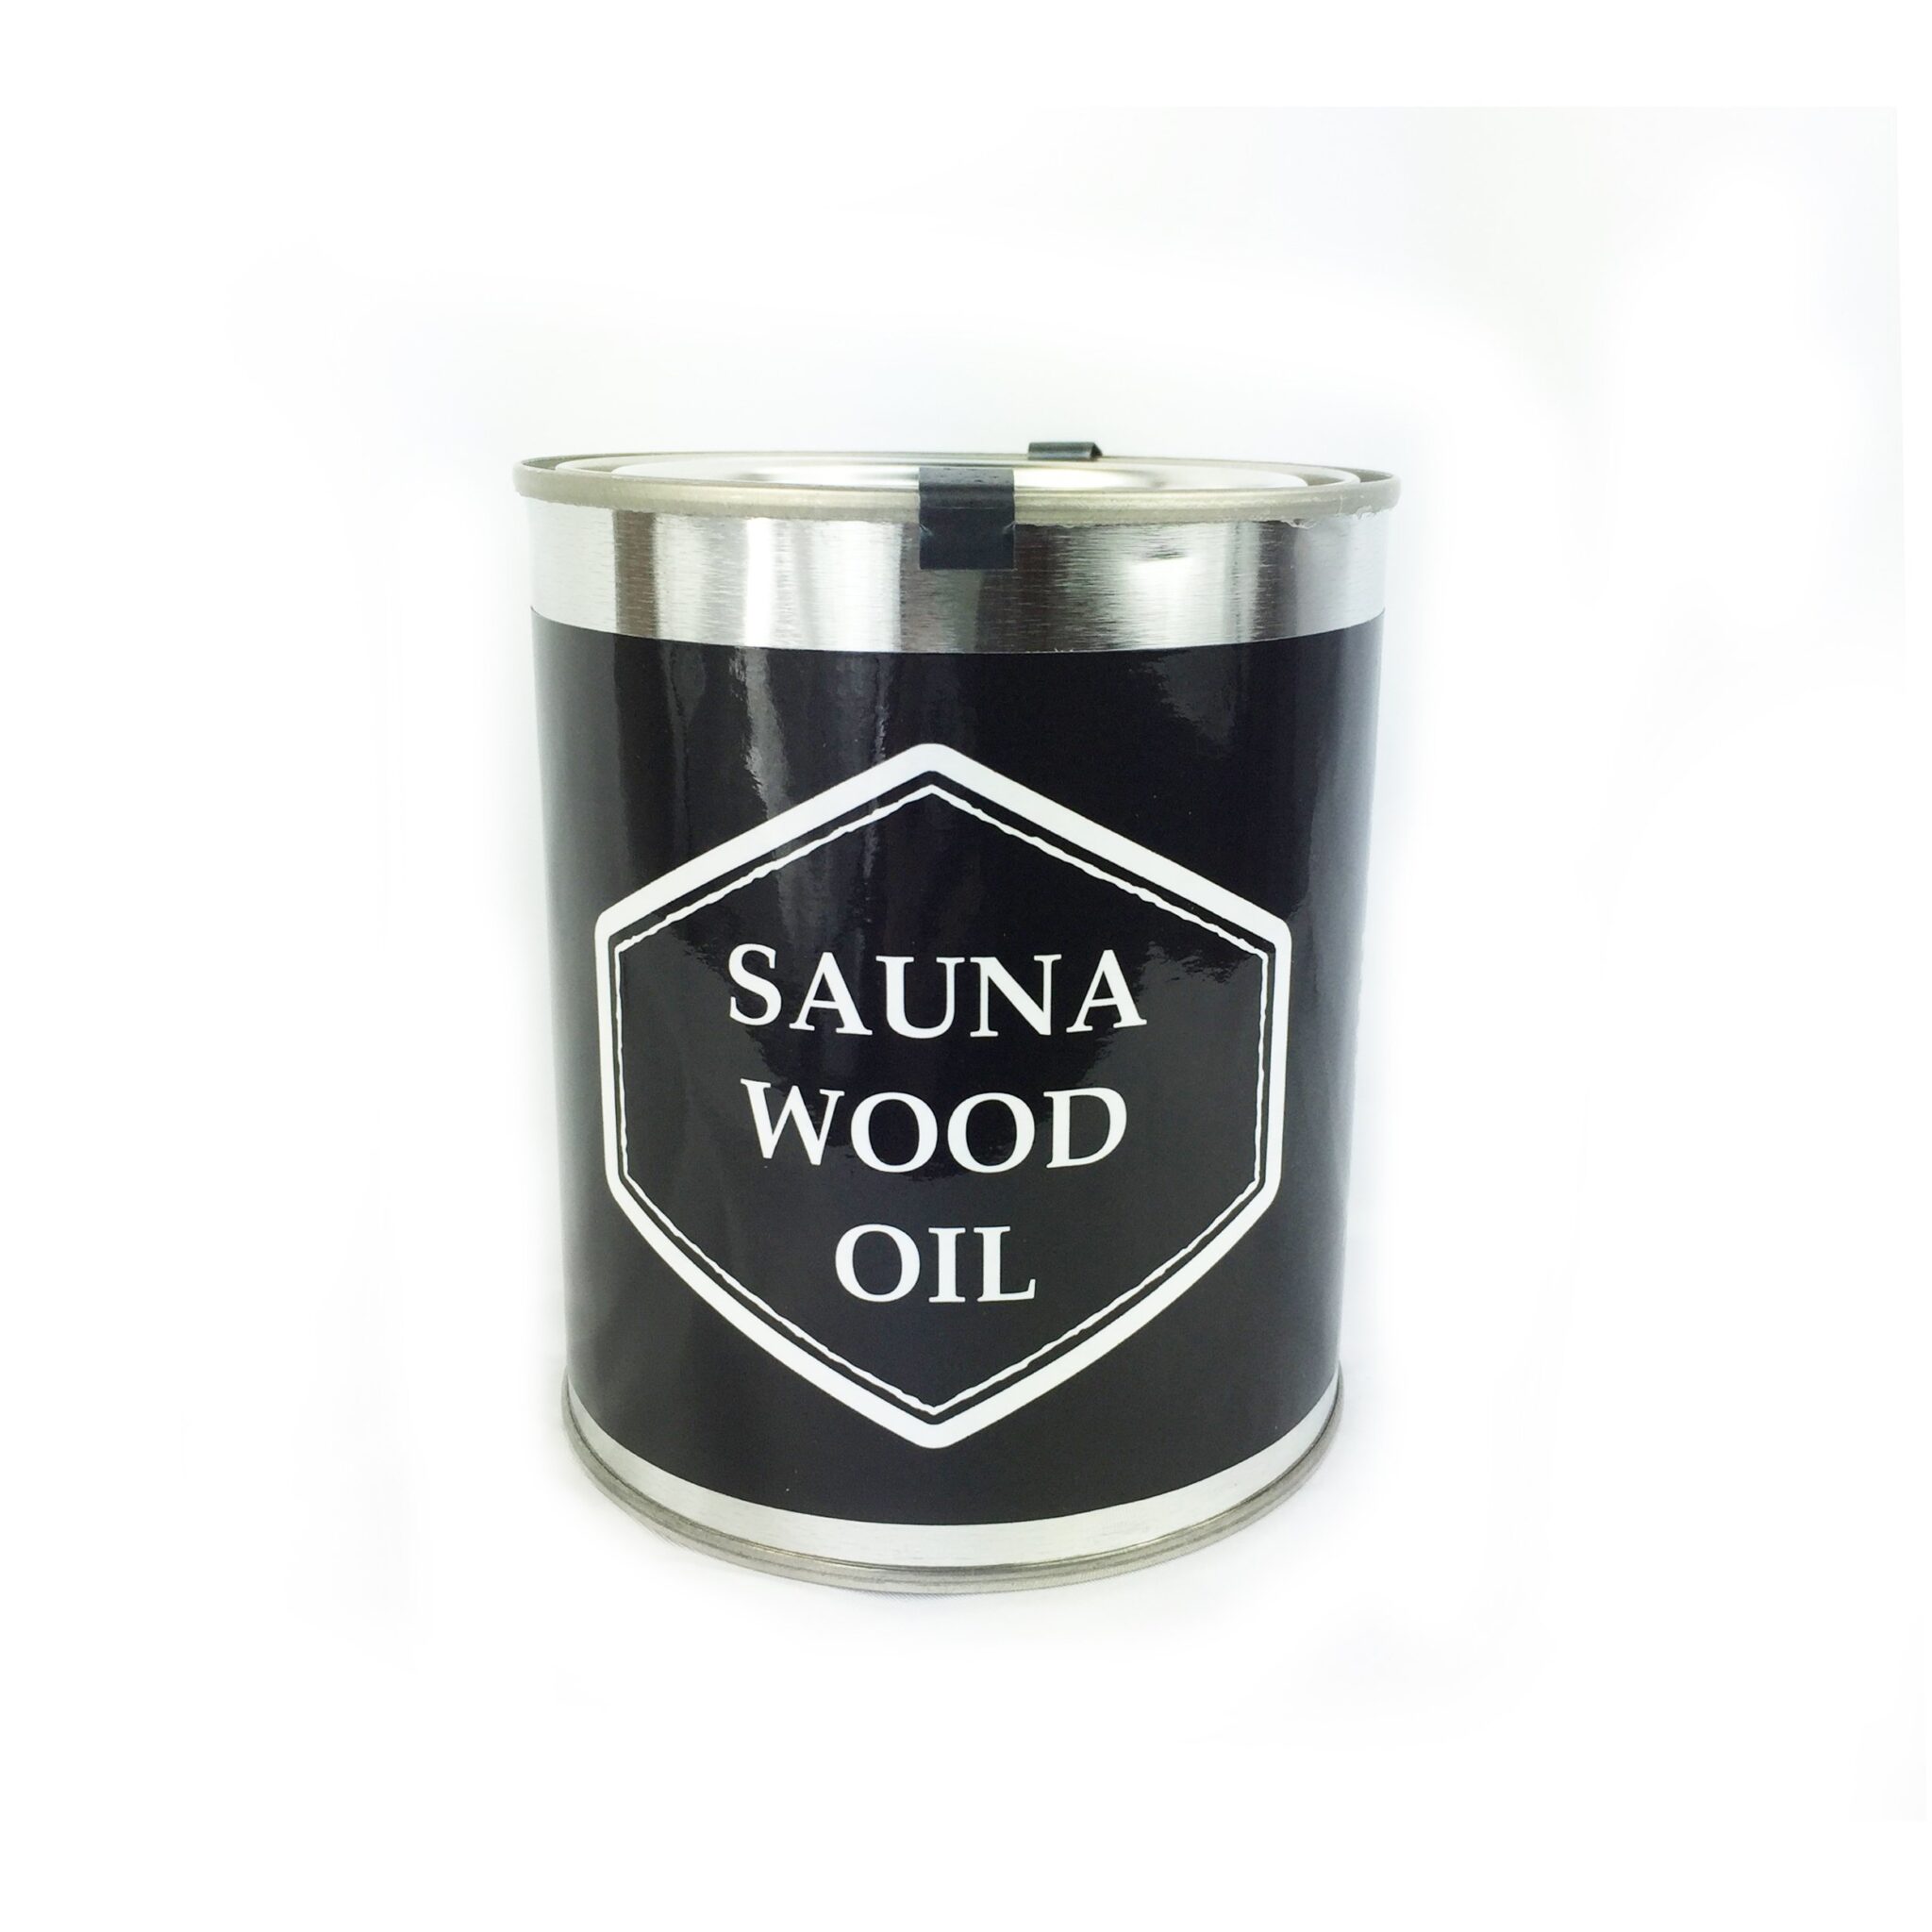 Sauna Wood Oil (seals and protects wood inside sauna) – 1 Quart